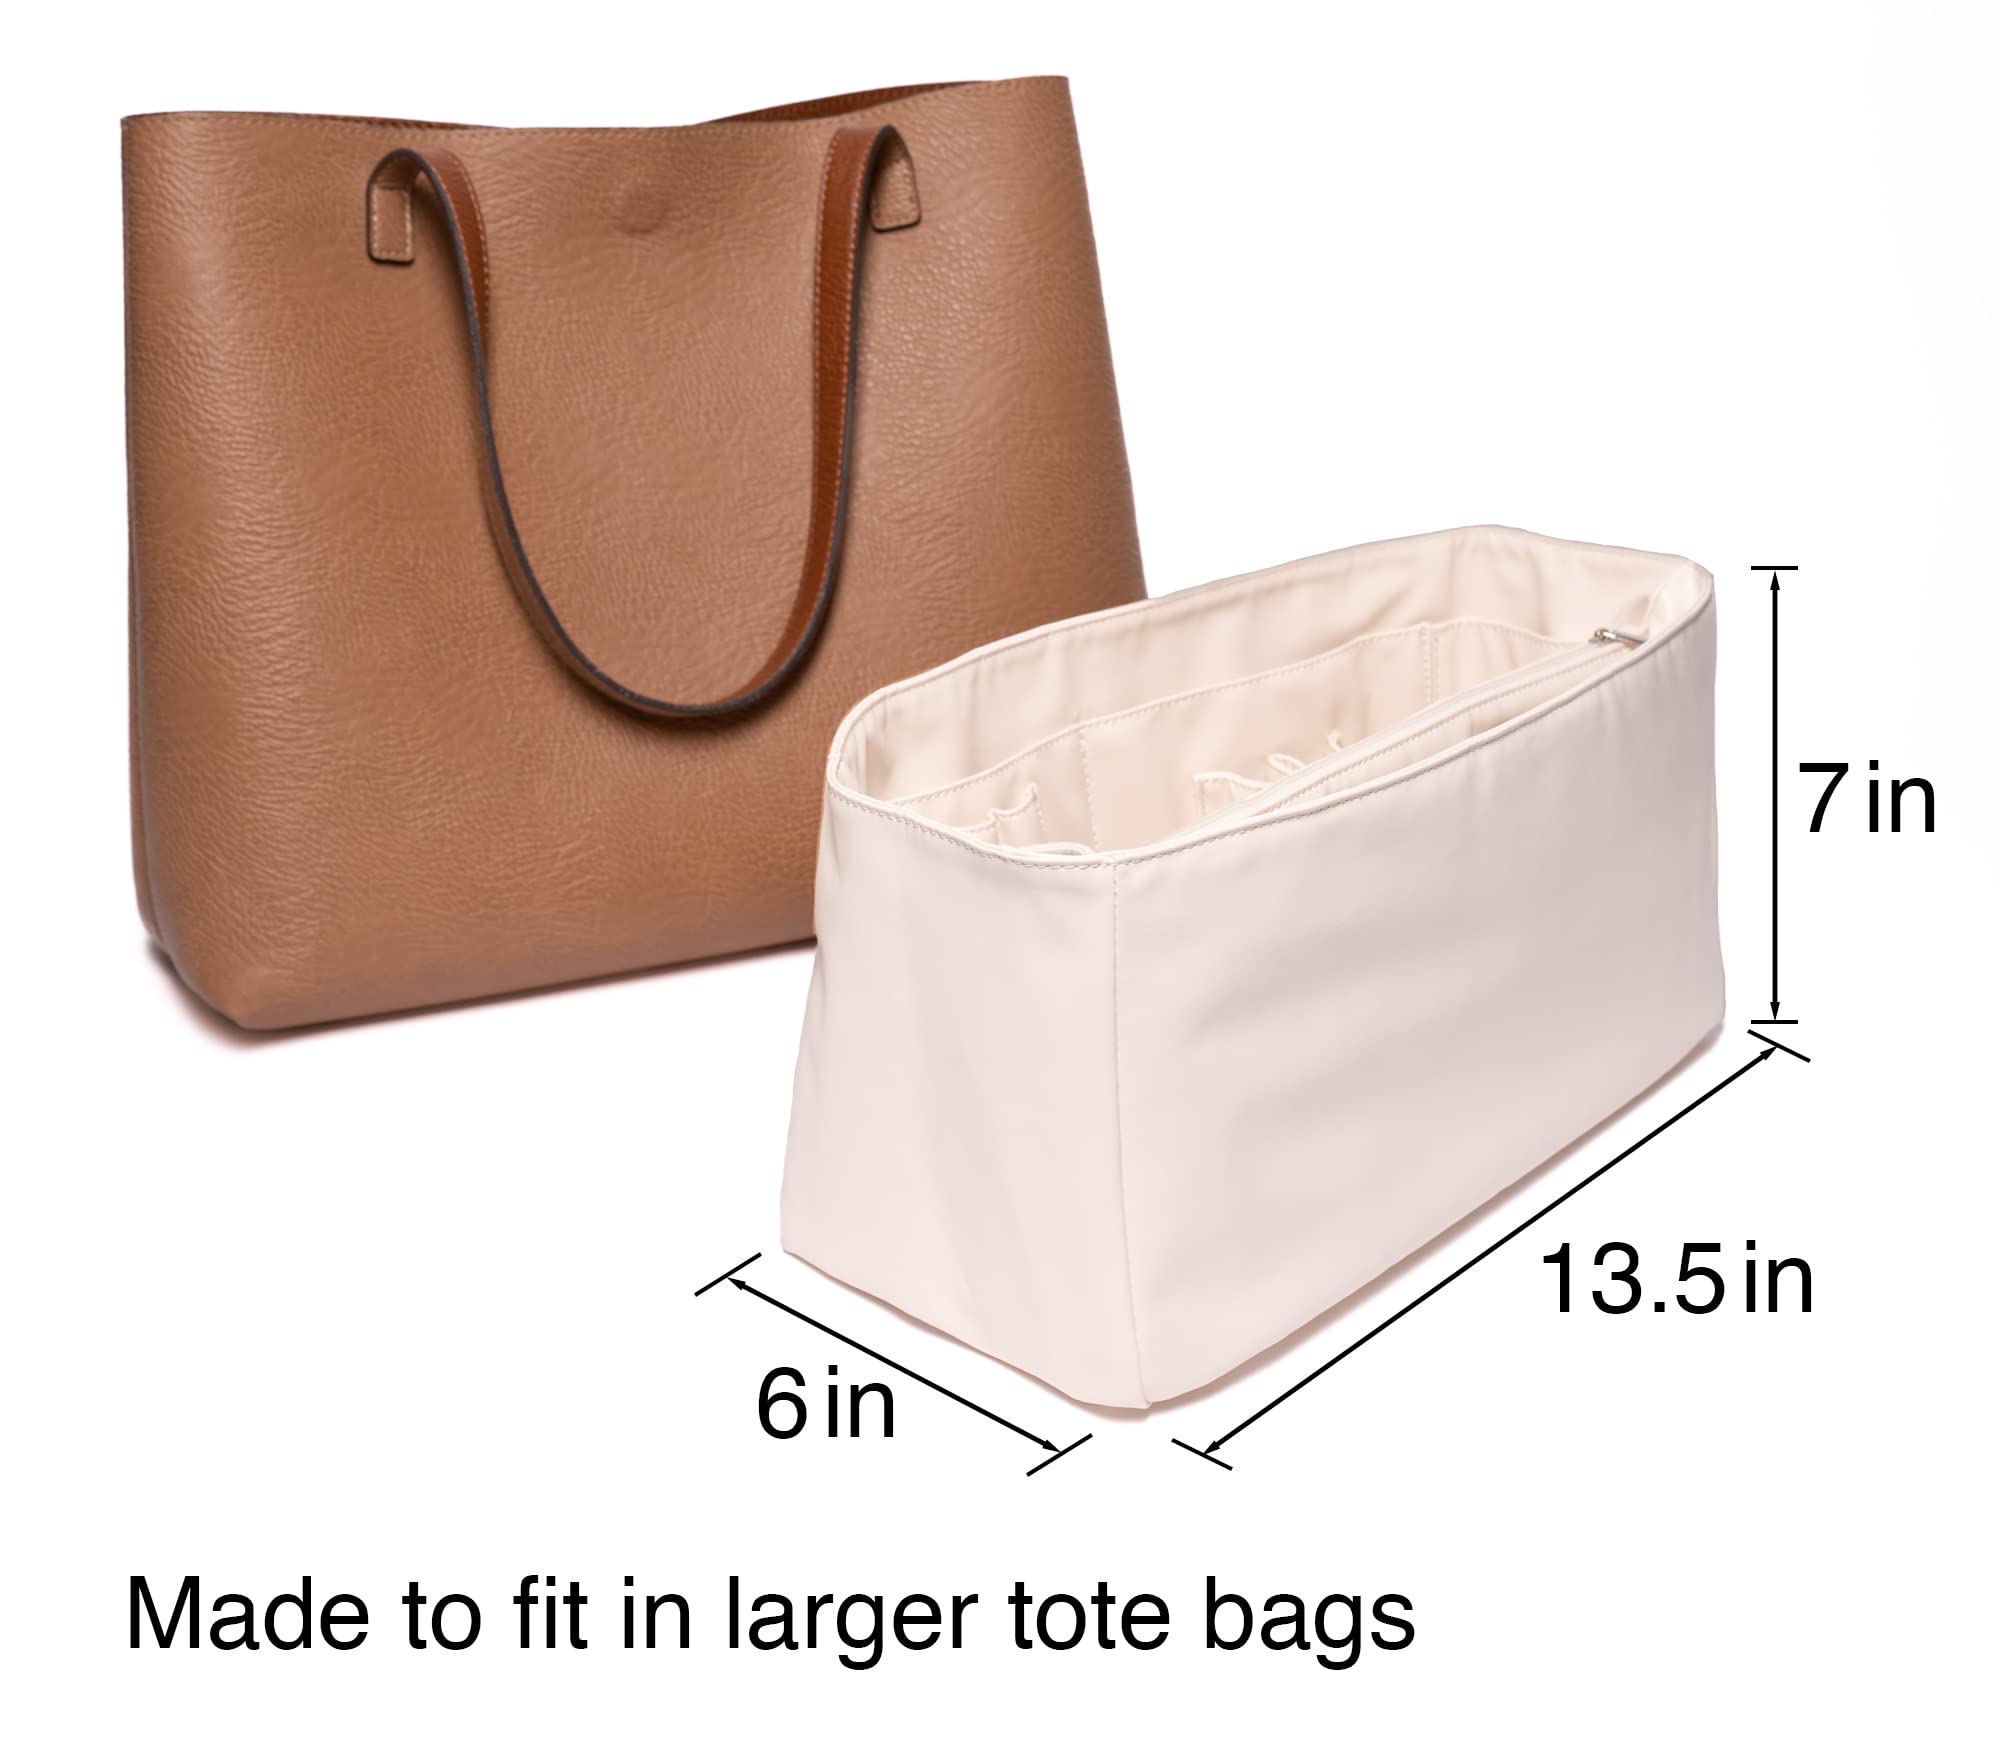 Share more than 164 purse bag organizer